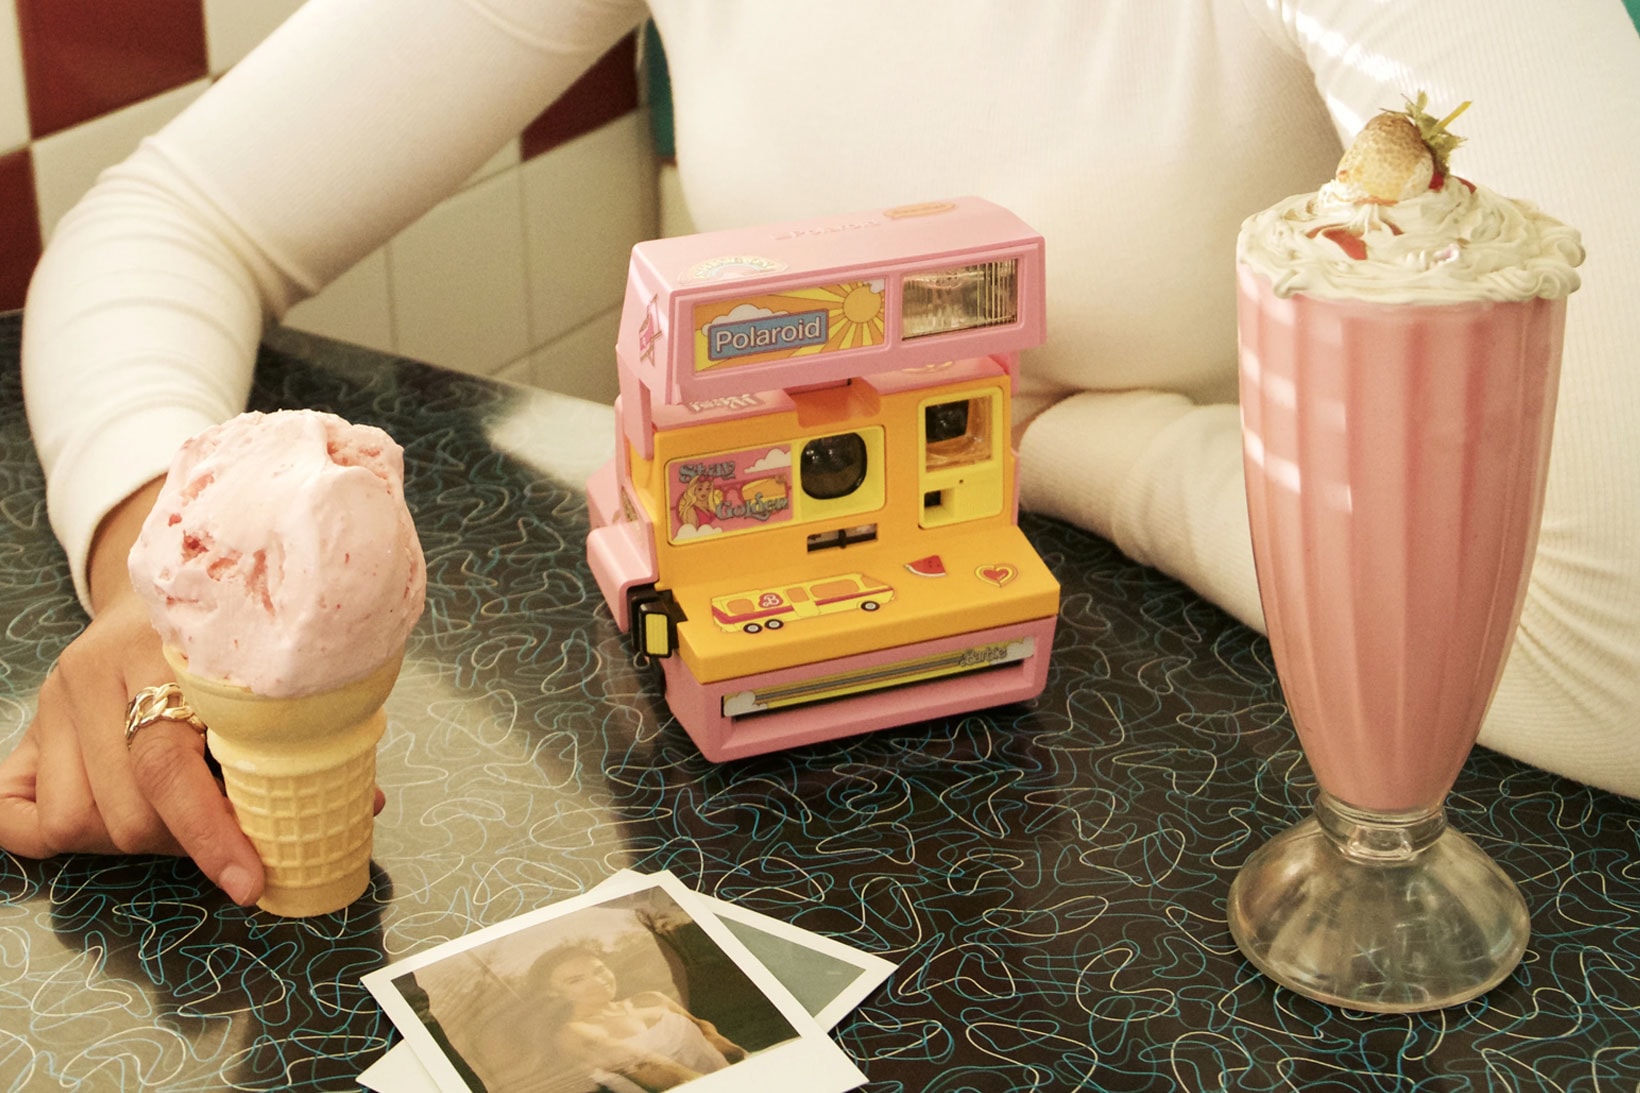 Polaroid Barbie Retrospekt 600 Instant Camera Collaboration Ice Cream Sundae Smoothie